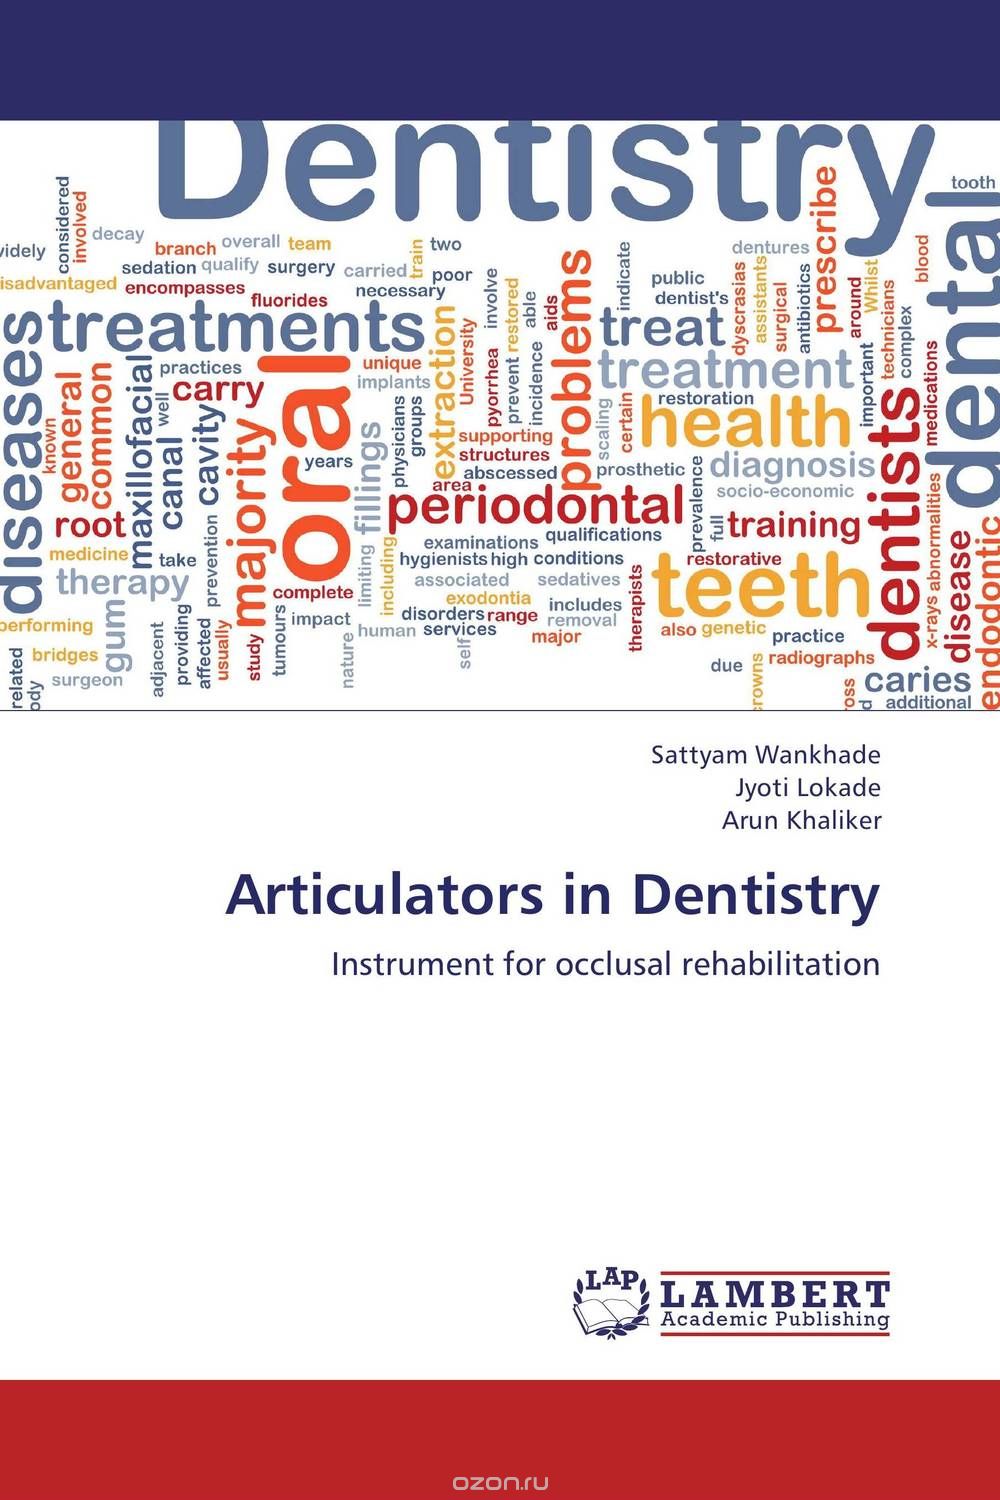 Скачать книгу "Articulators in Dentistry"